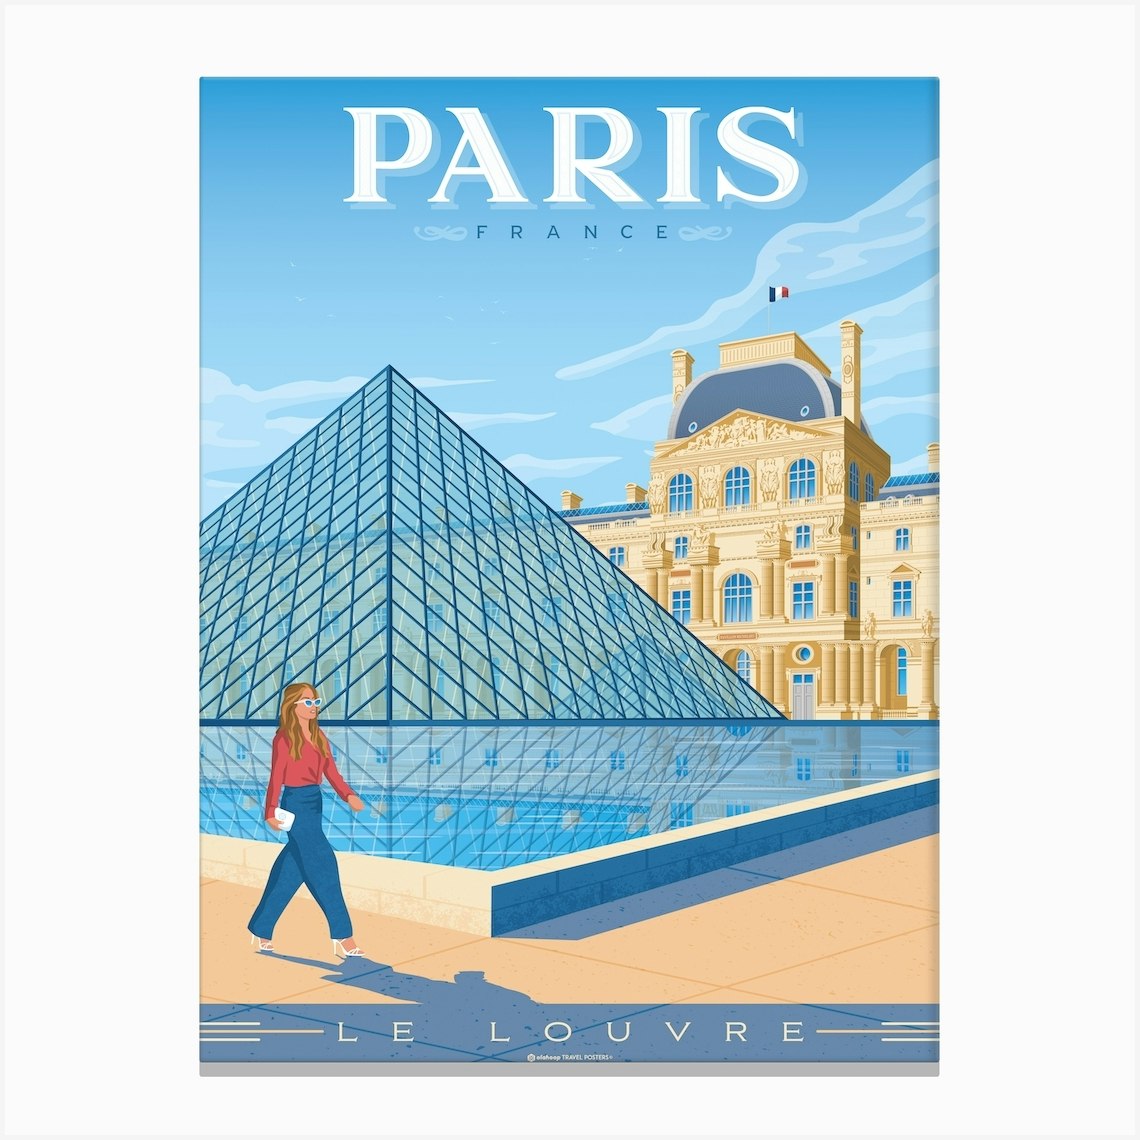 Paris France Le Louvre Fy Travel - Museum Olahoop Pyramids by Print Canvas Posters